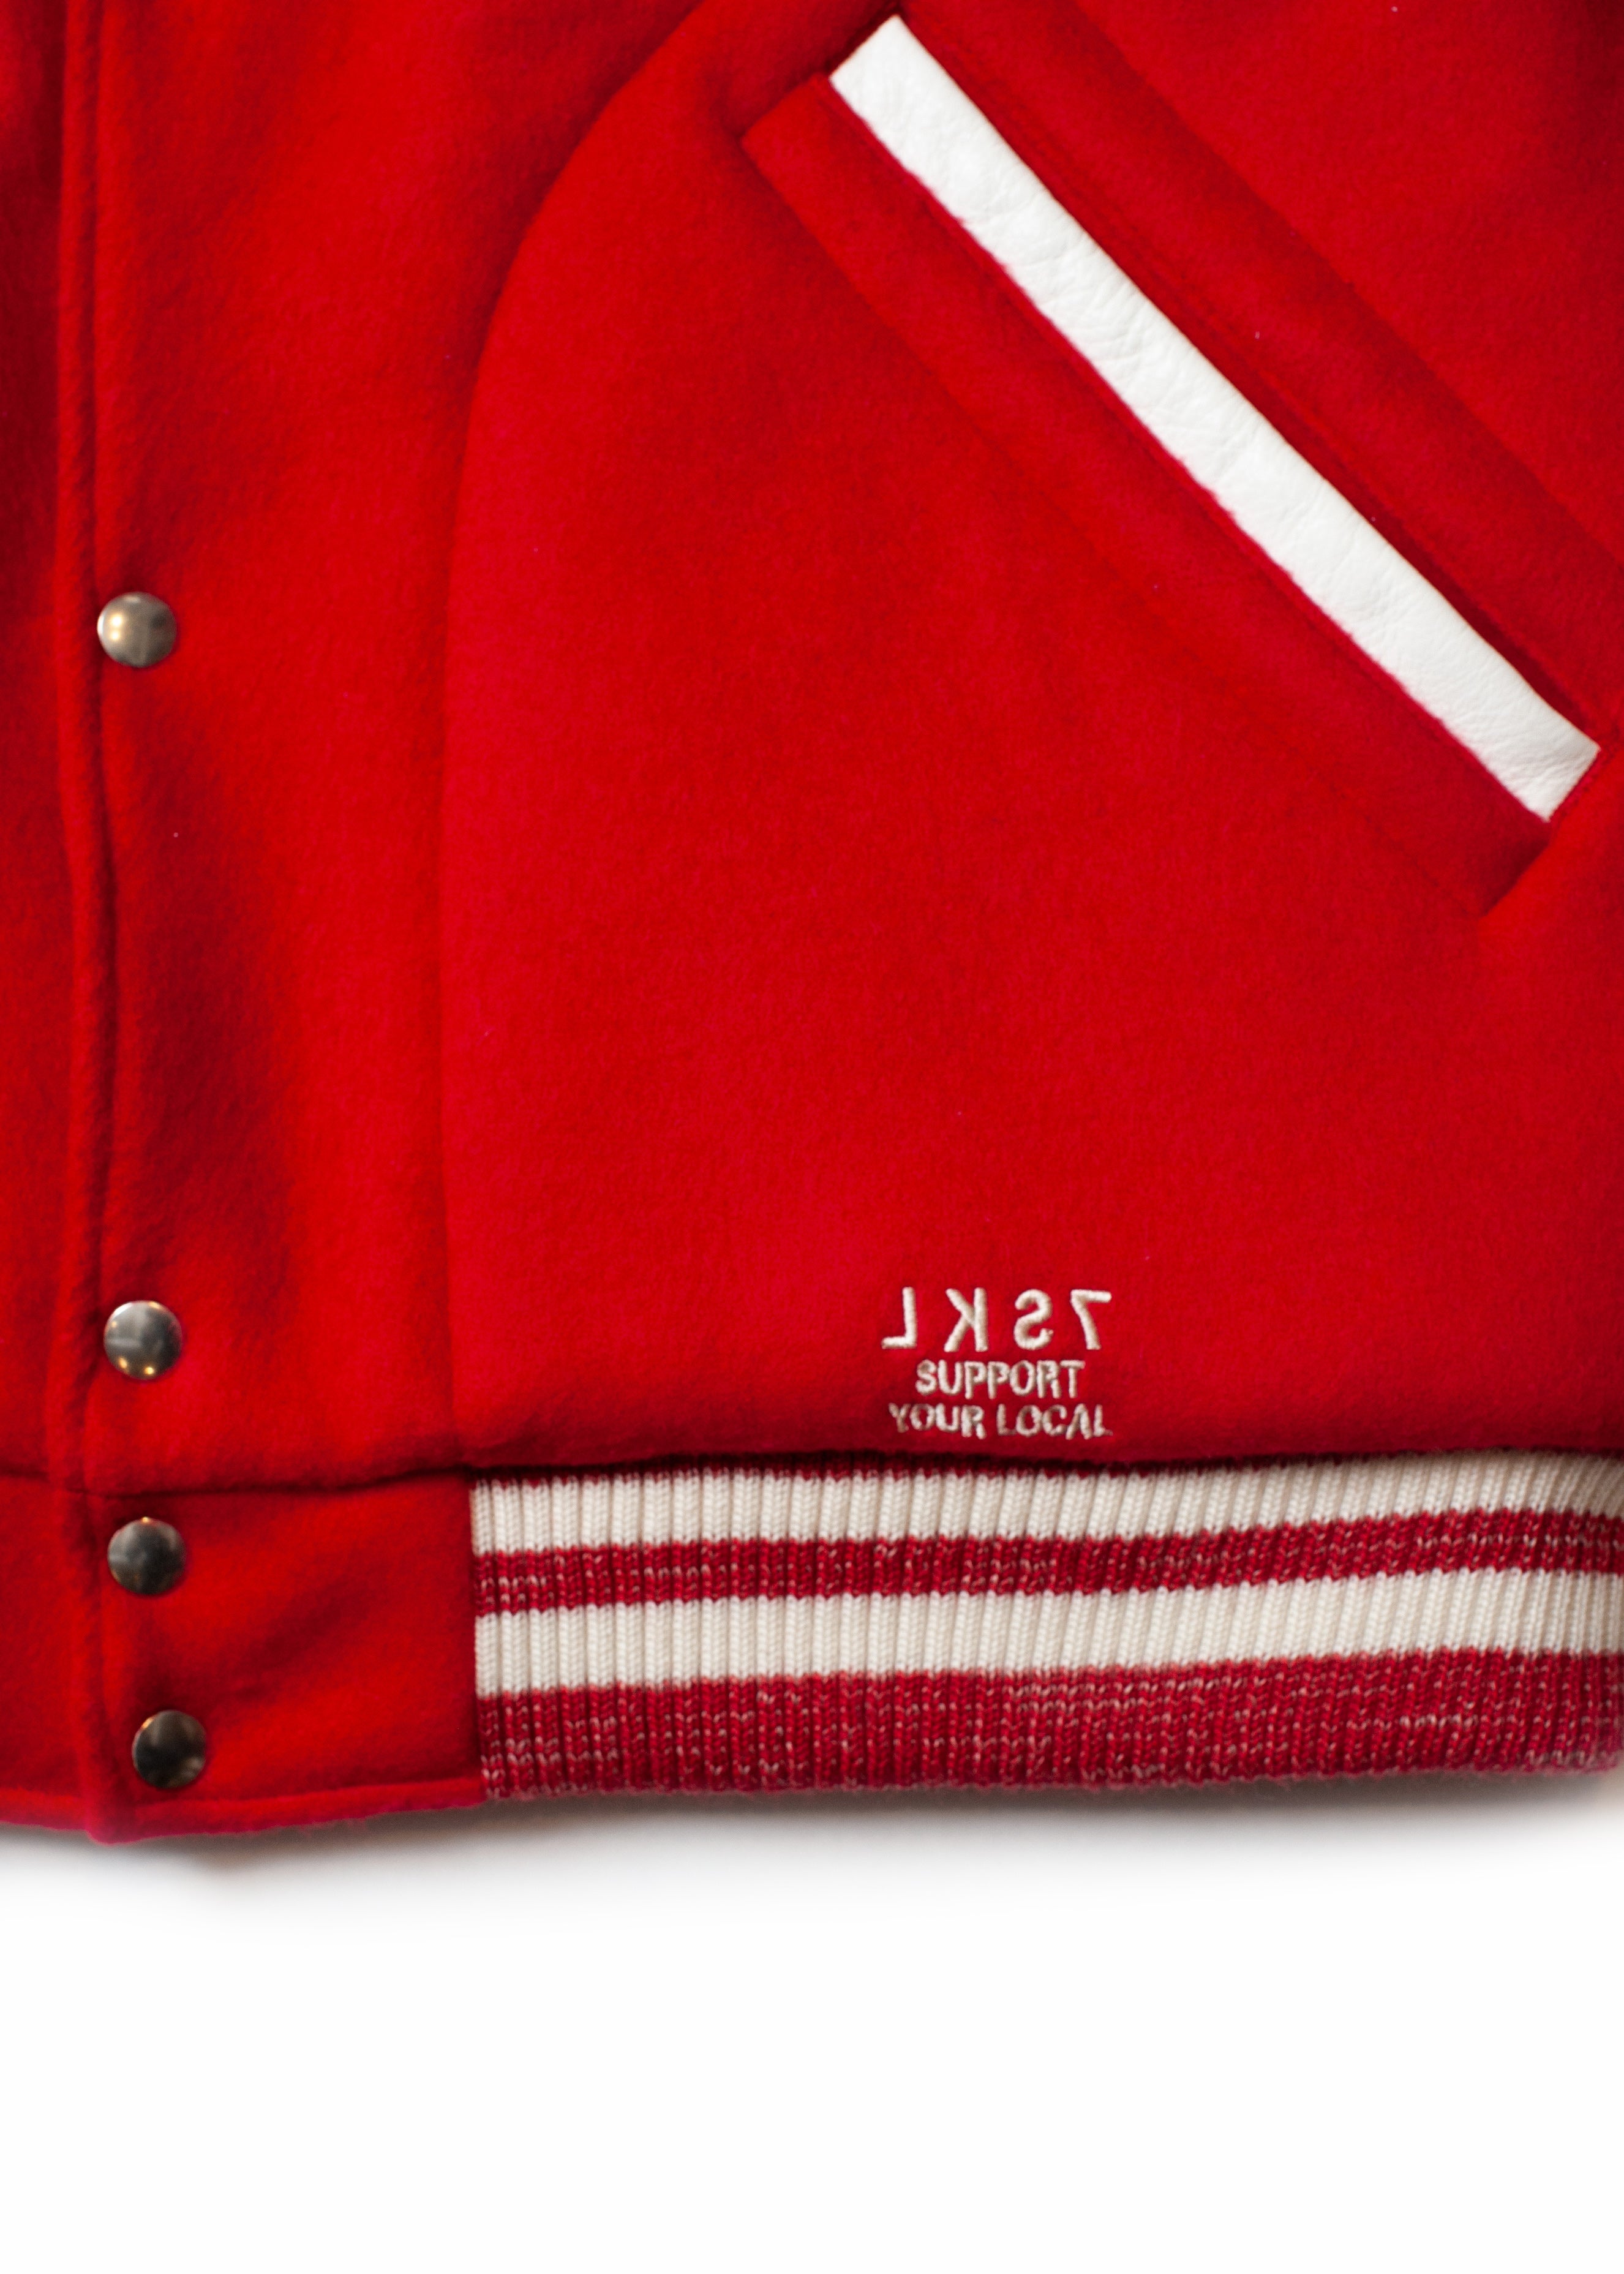 JK-SV-IA-1008:Beaver Award jacket